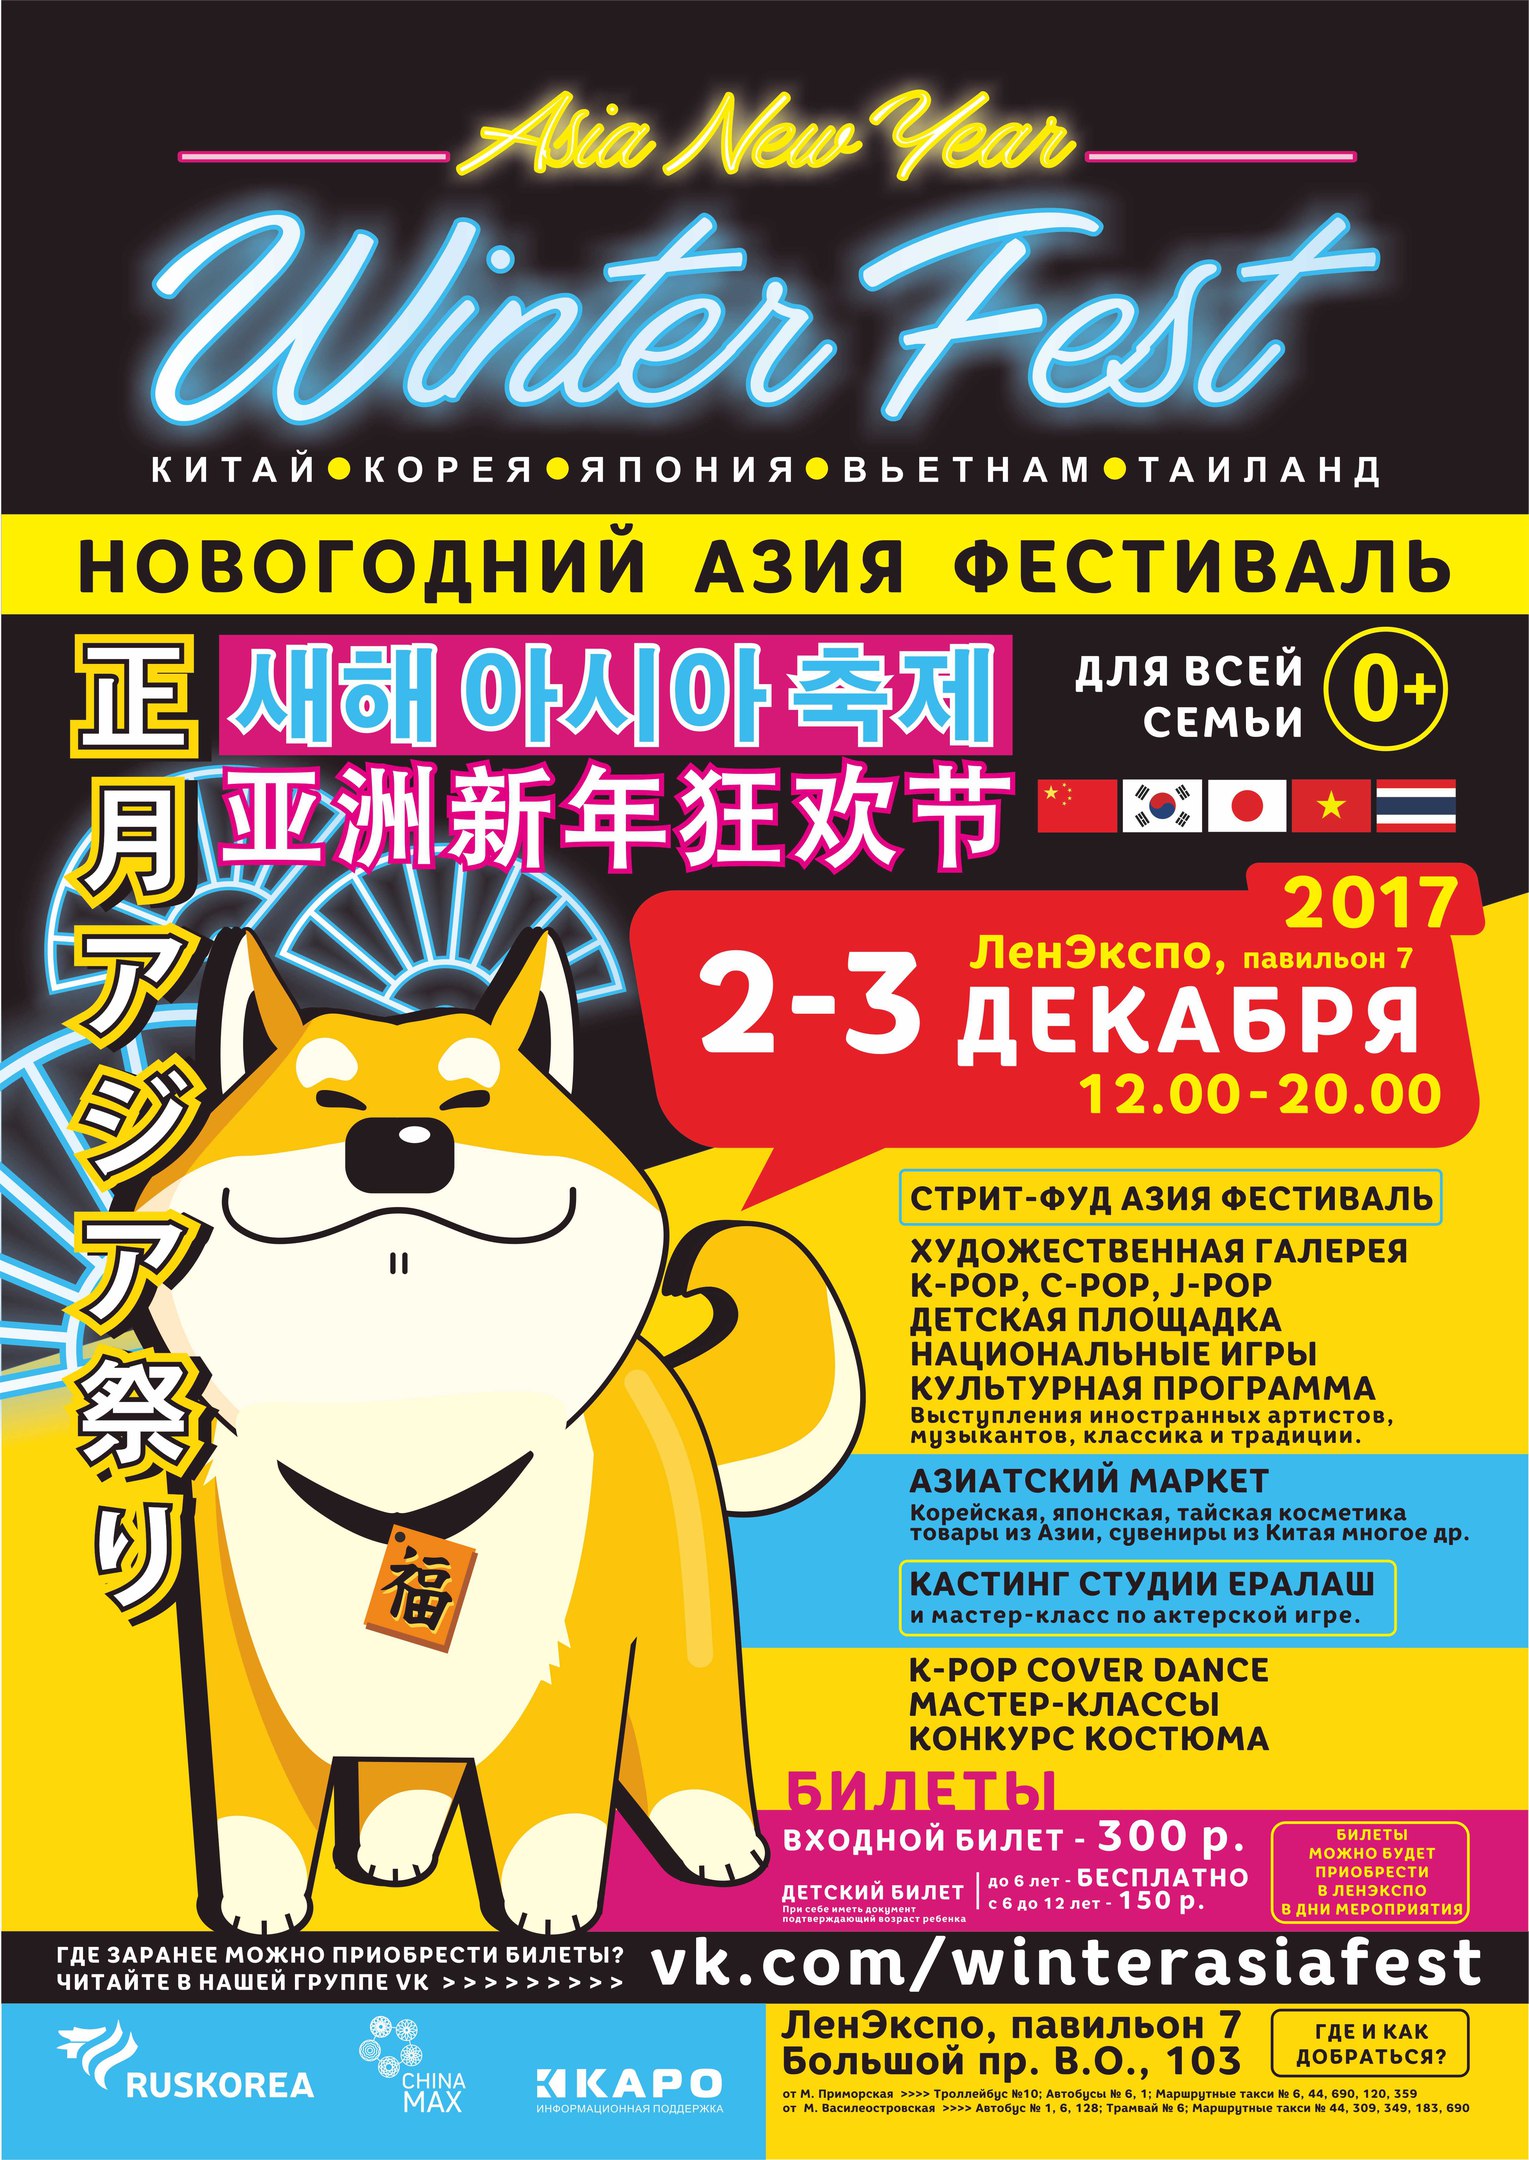 ​Новогодний Азия Фестиваль «Winter Fest»